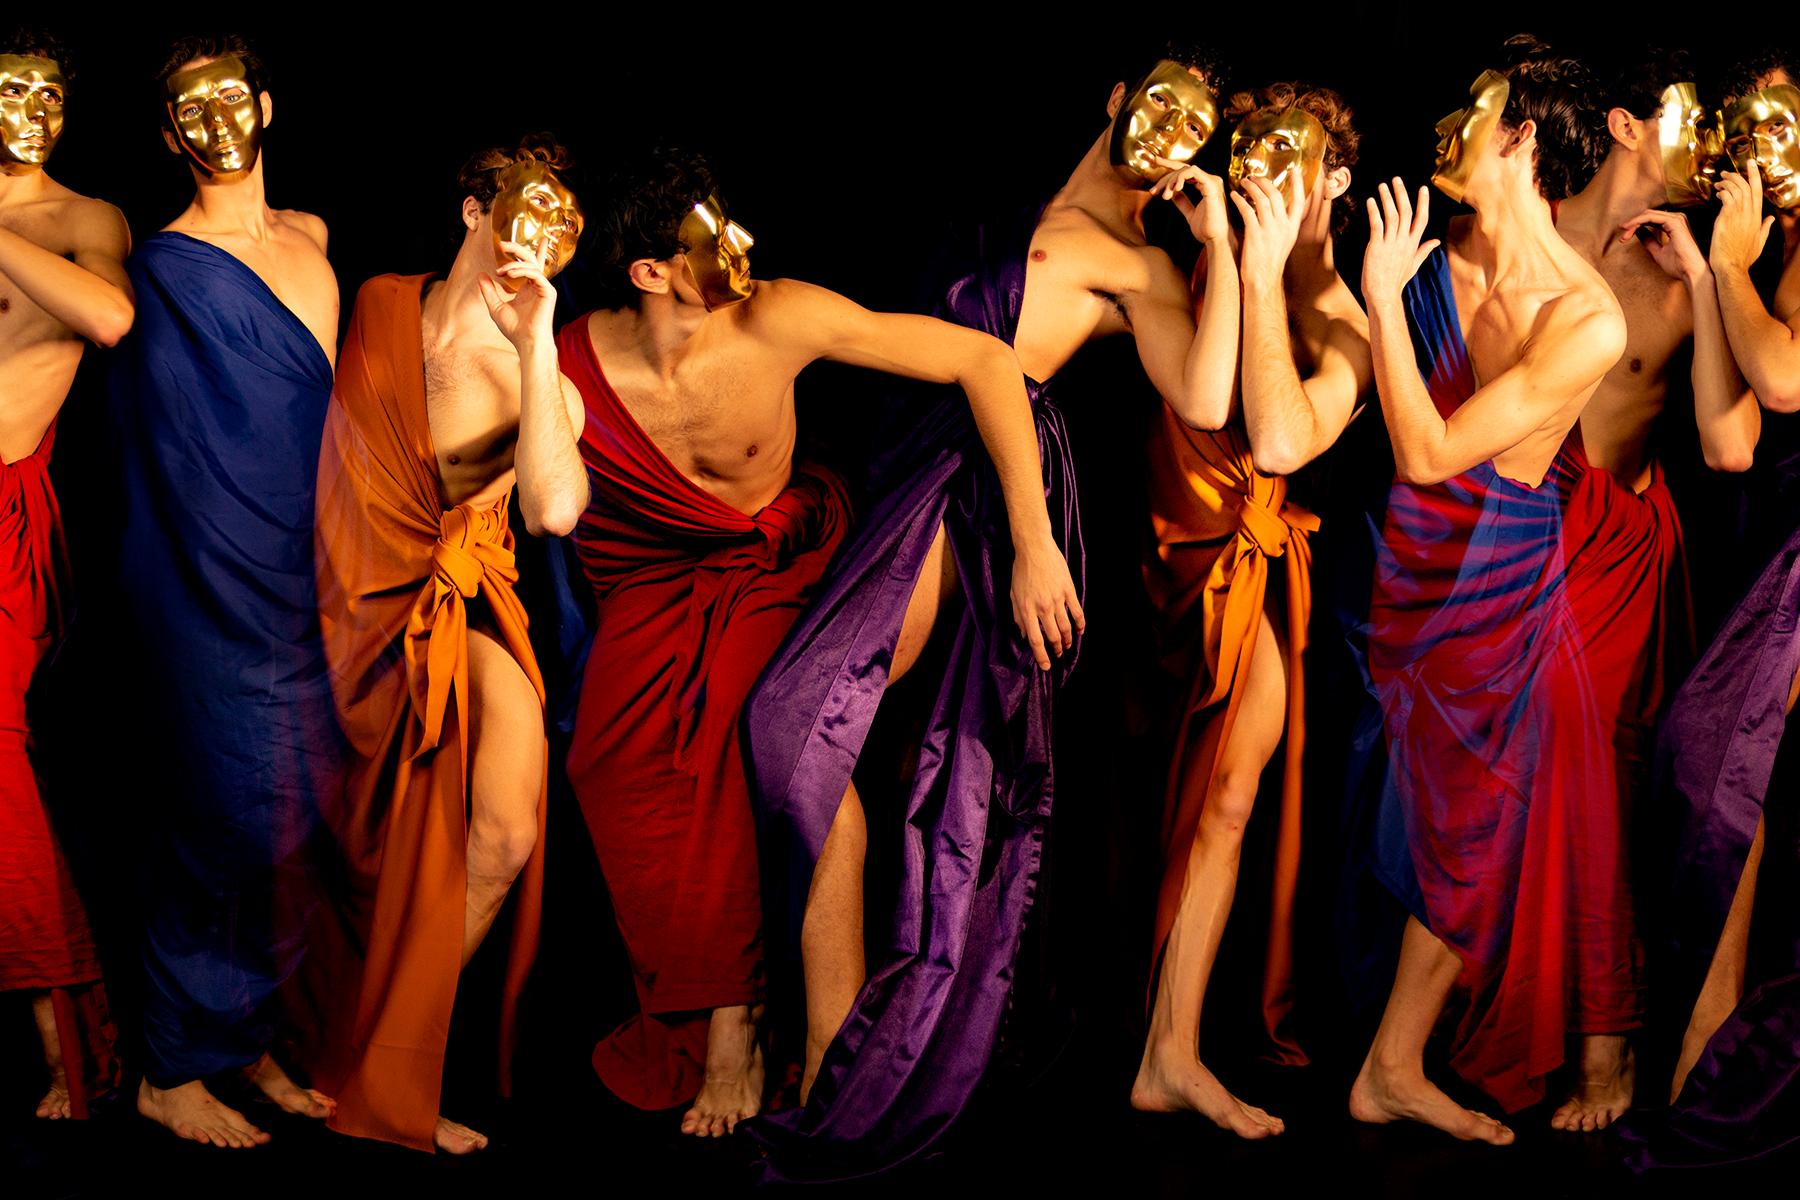 Figurative Photograph Ricky Cohete - El mensaje. De la série danza de las naranjas. Photographie de couleur figurative